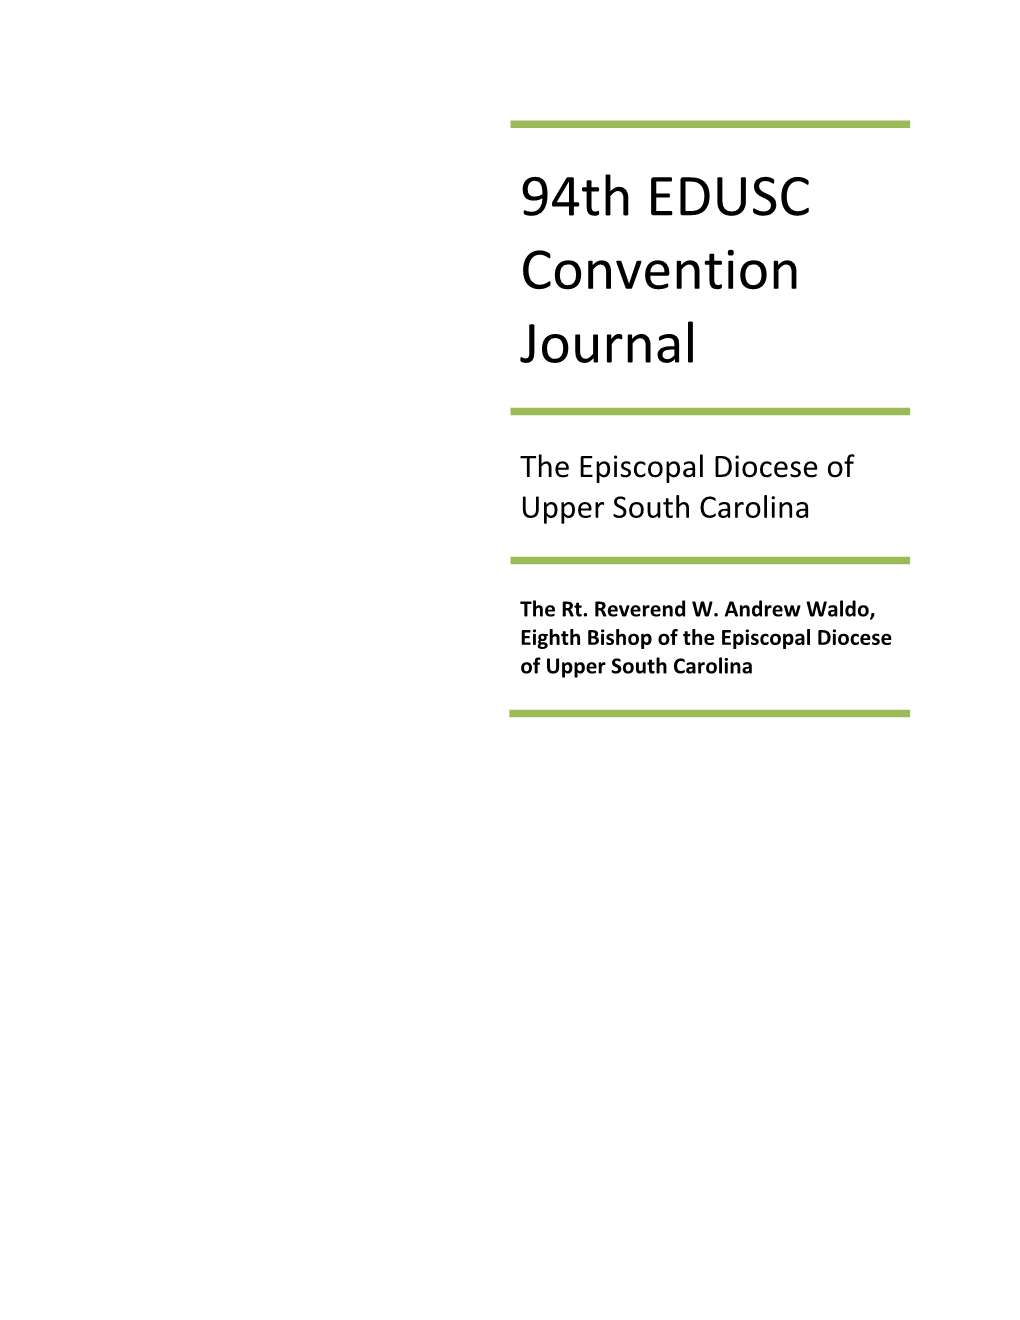 94Th EDUSC Convention Journal